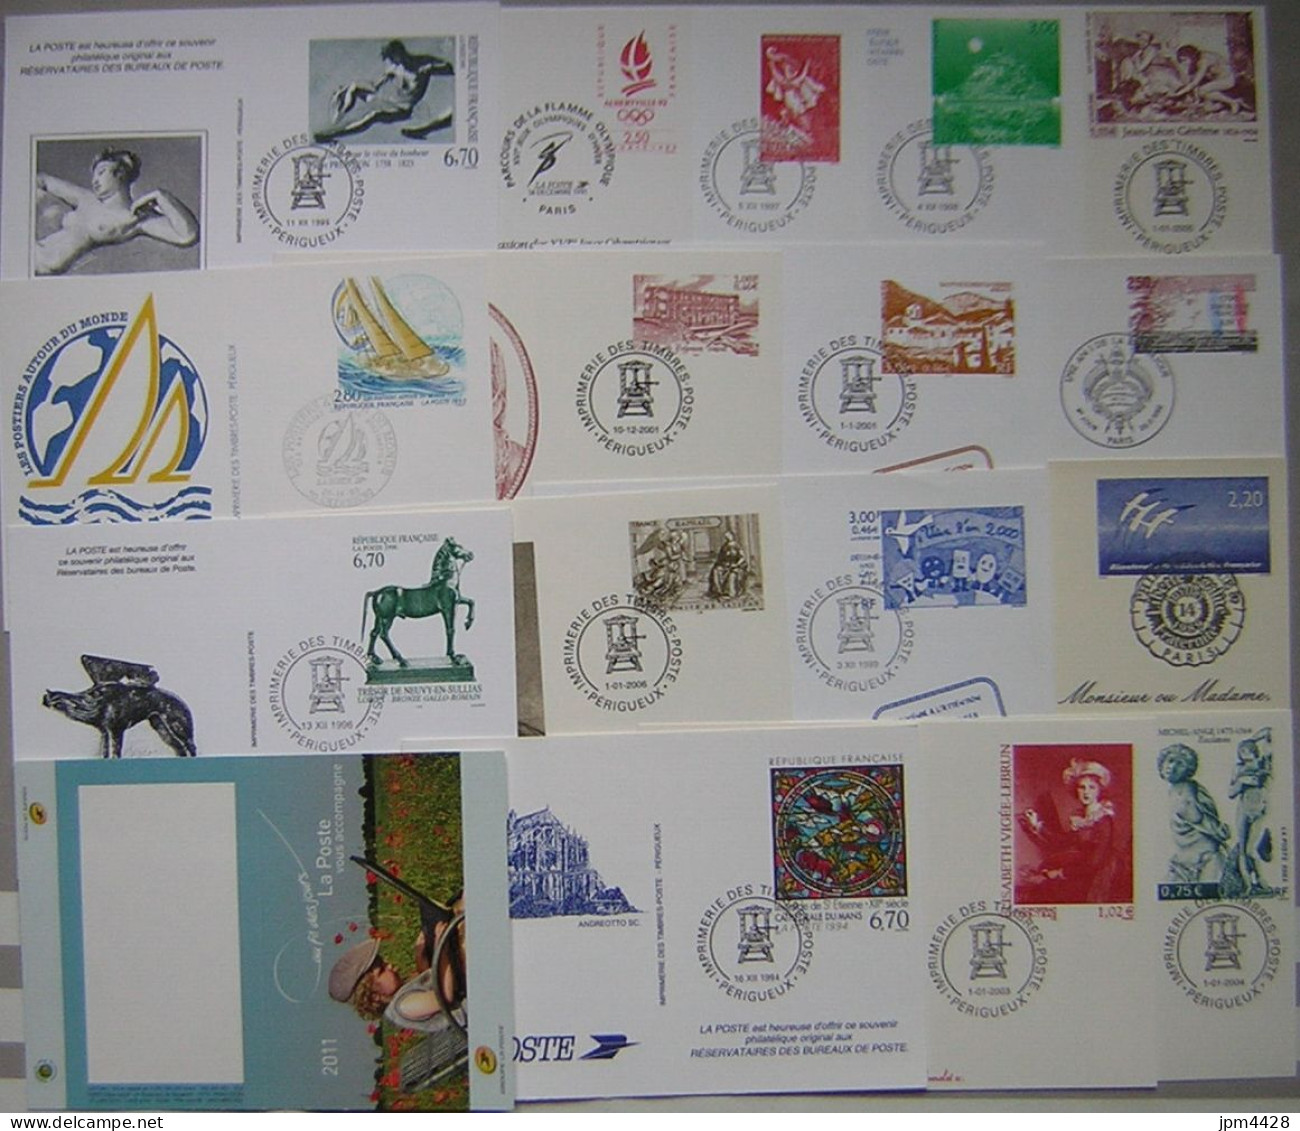 Document La Poste lot de 93 documents dont calendriers semestriels, programme des émissions de timbres - Cartes diverses